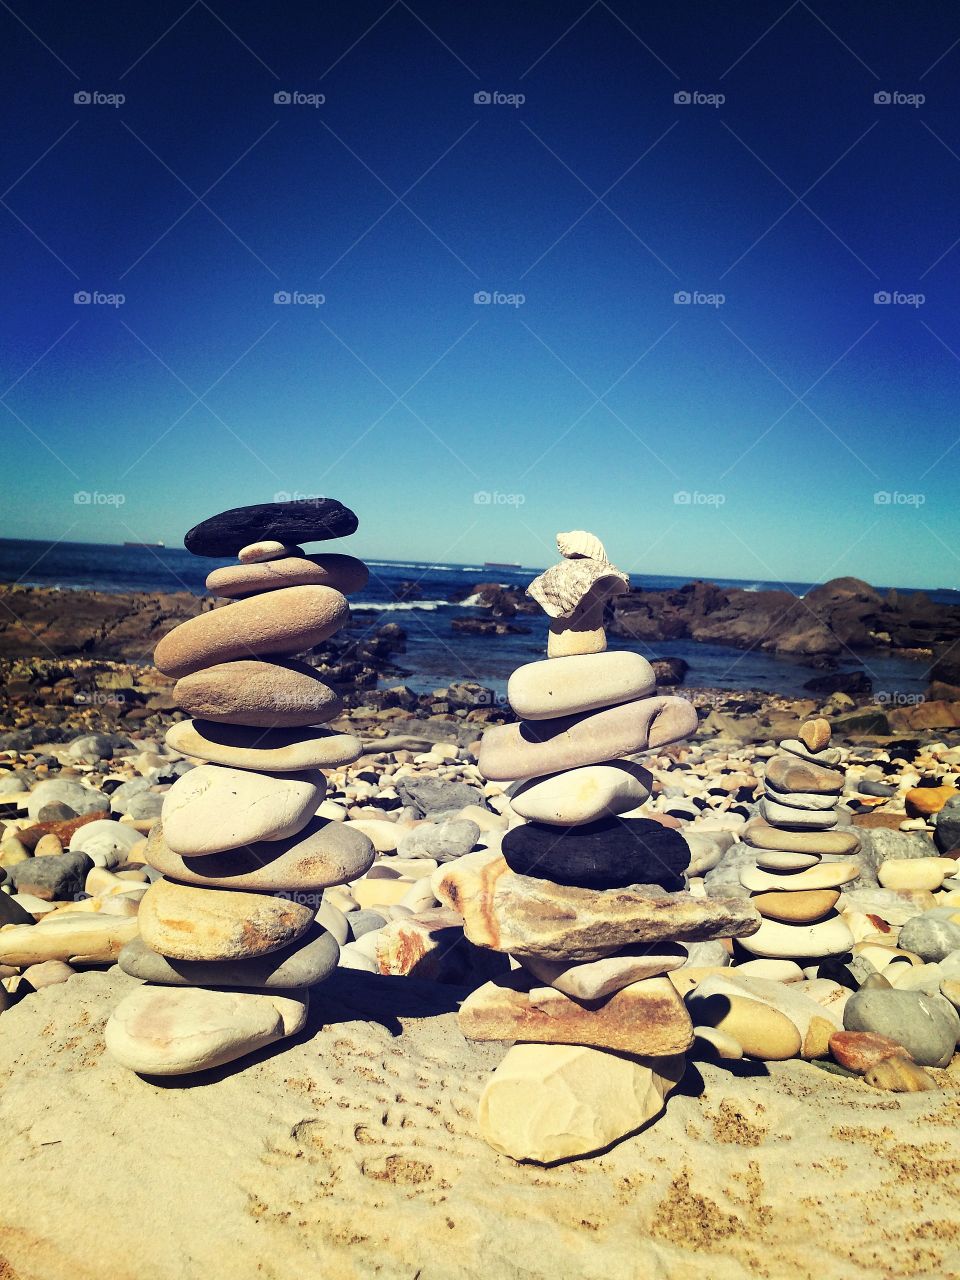 Balancing rocks 